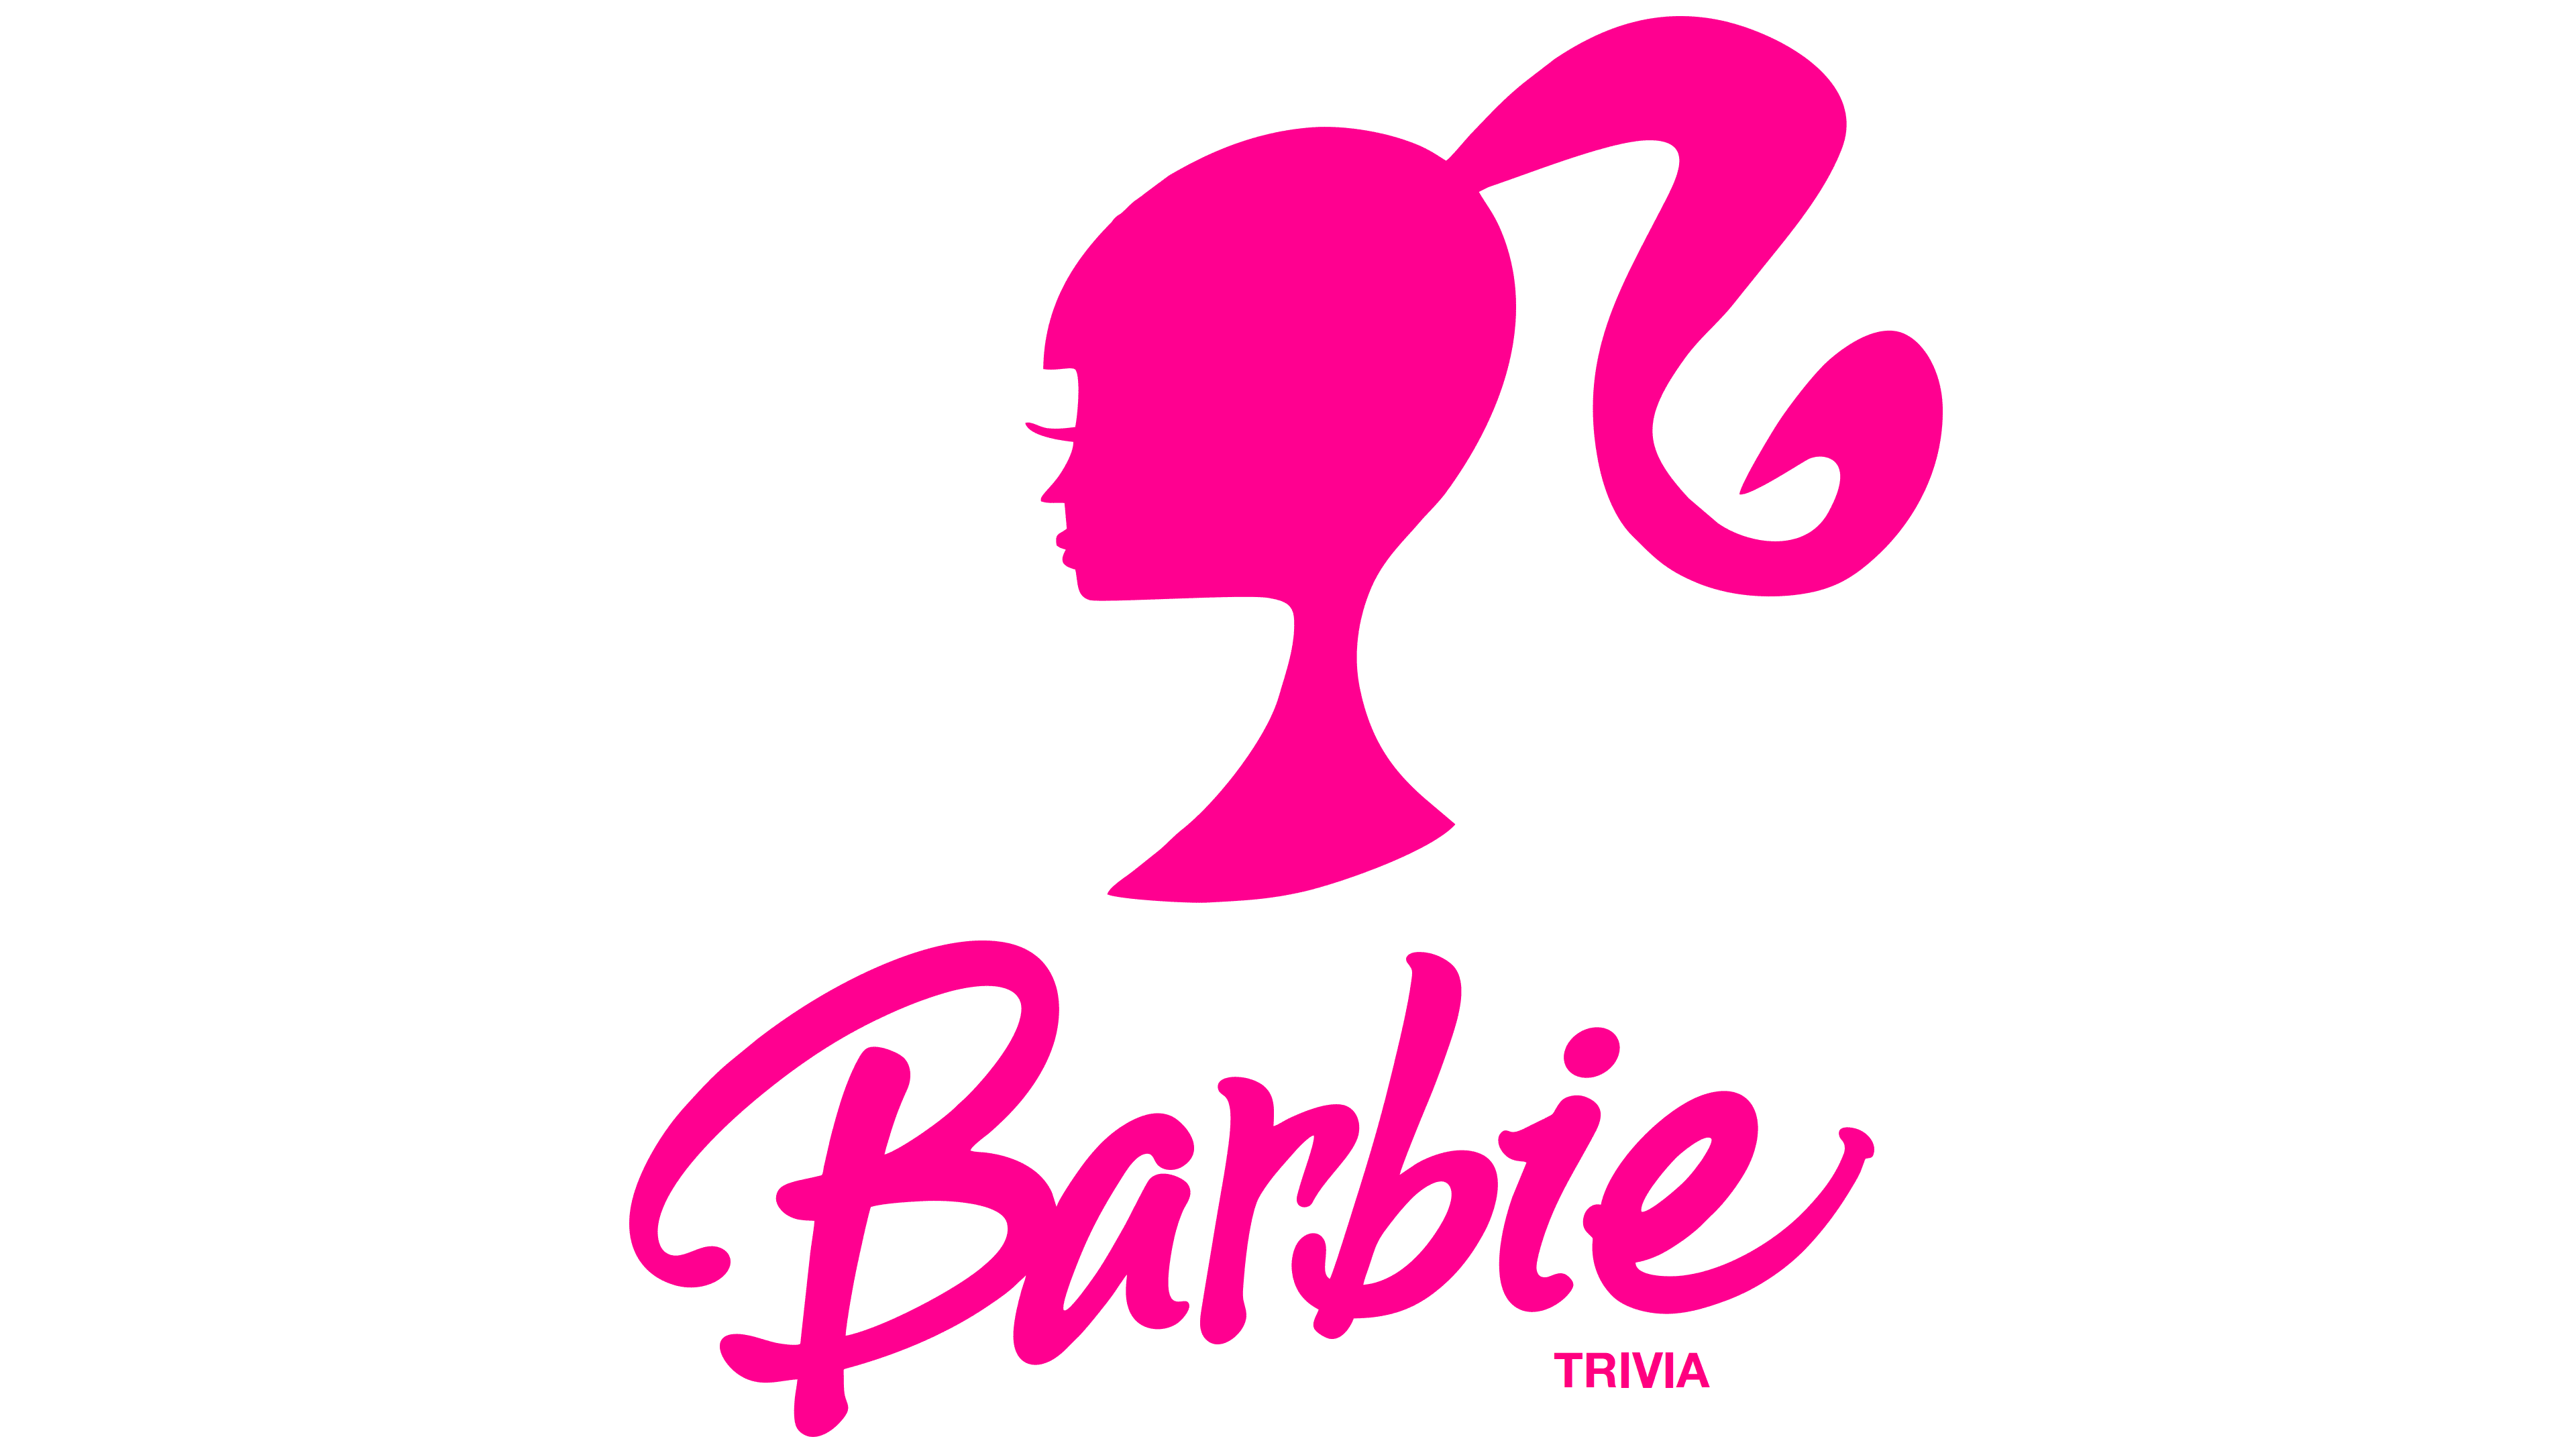 Barbie trivia